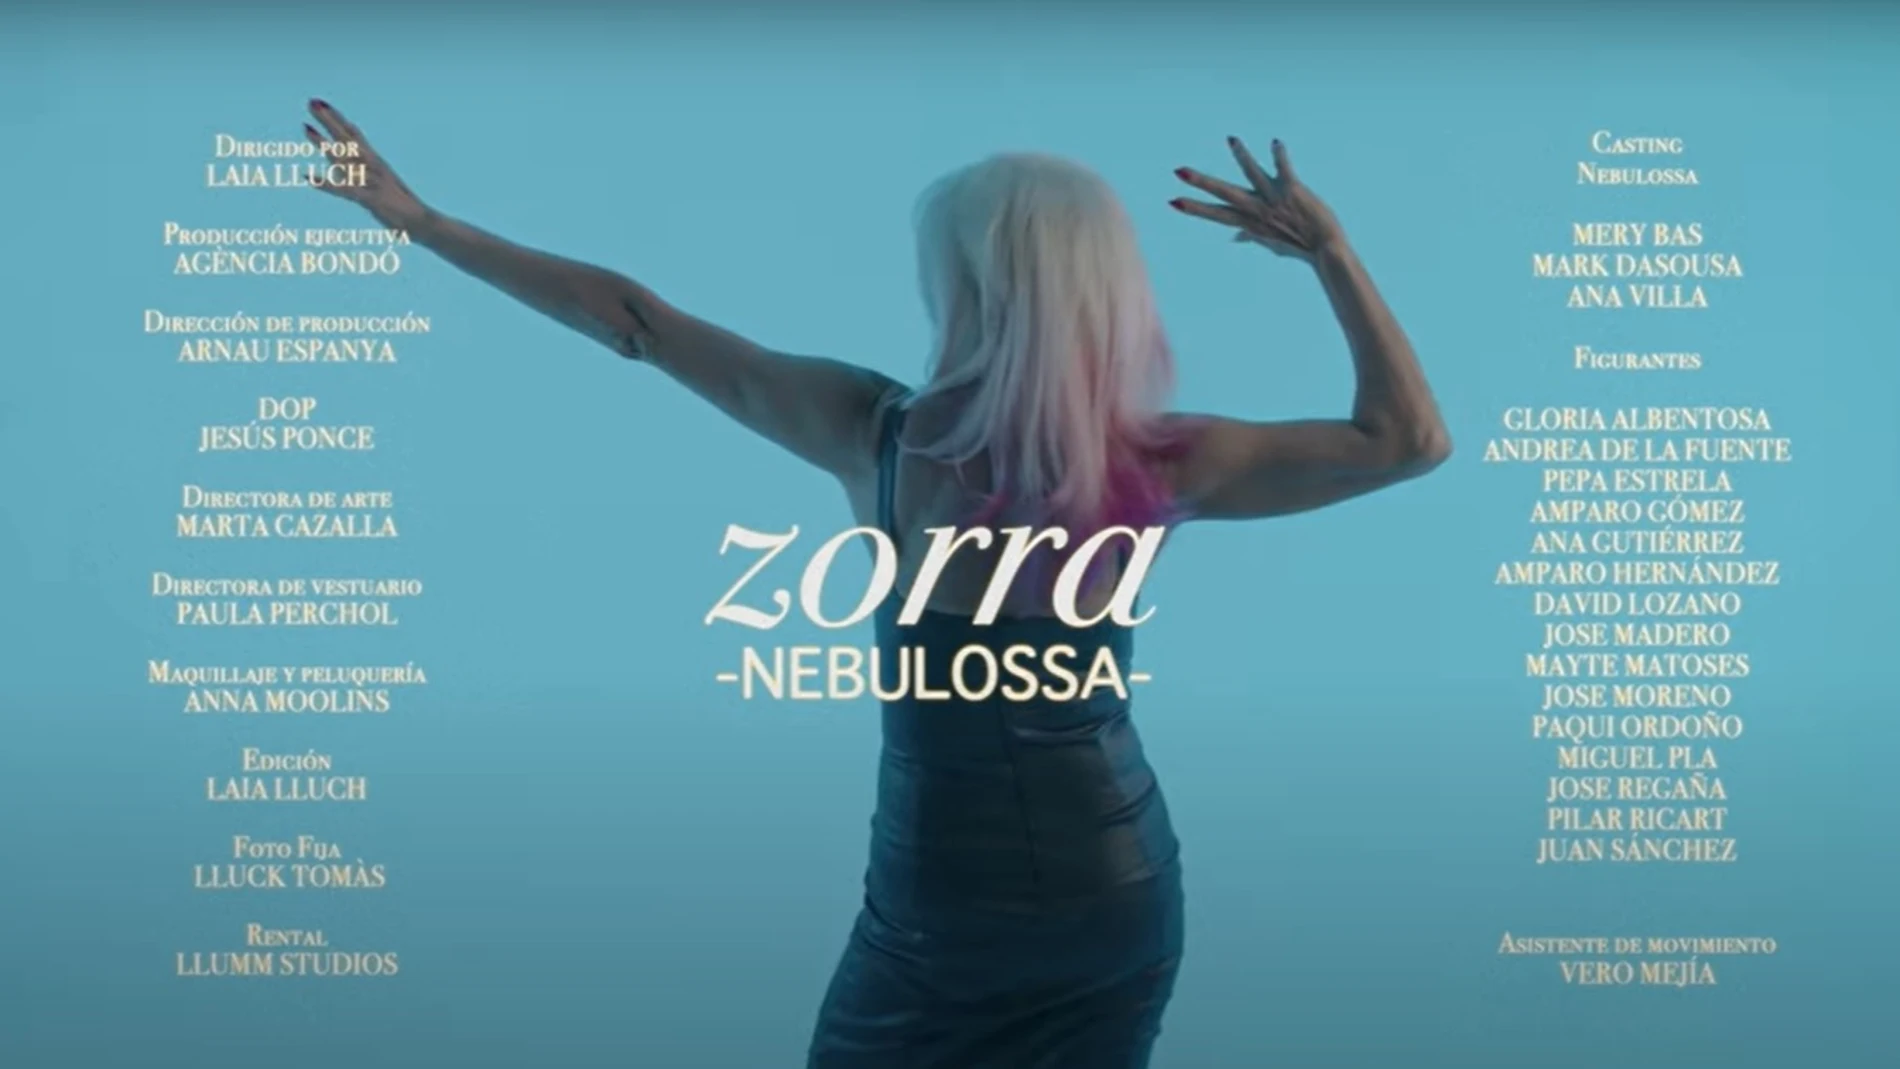 Videoclip de "Zorra"